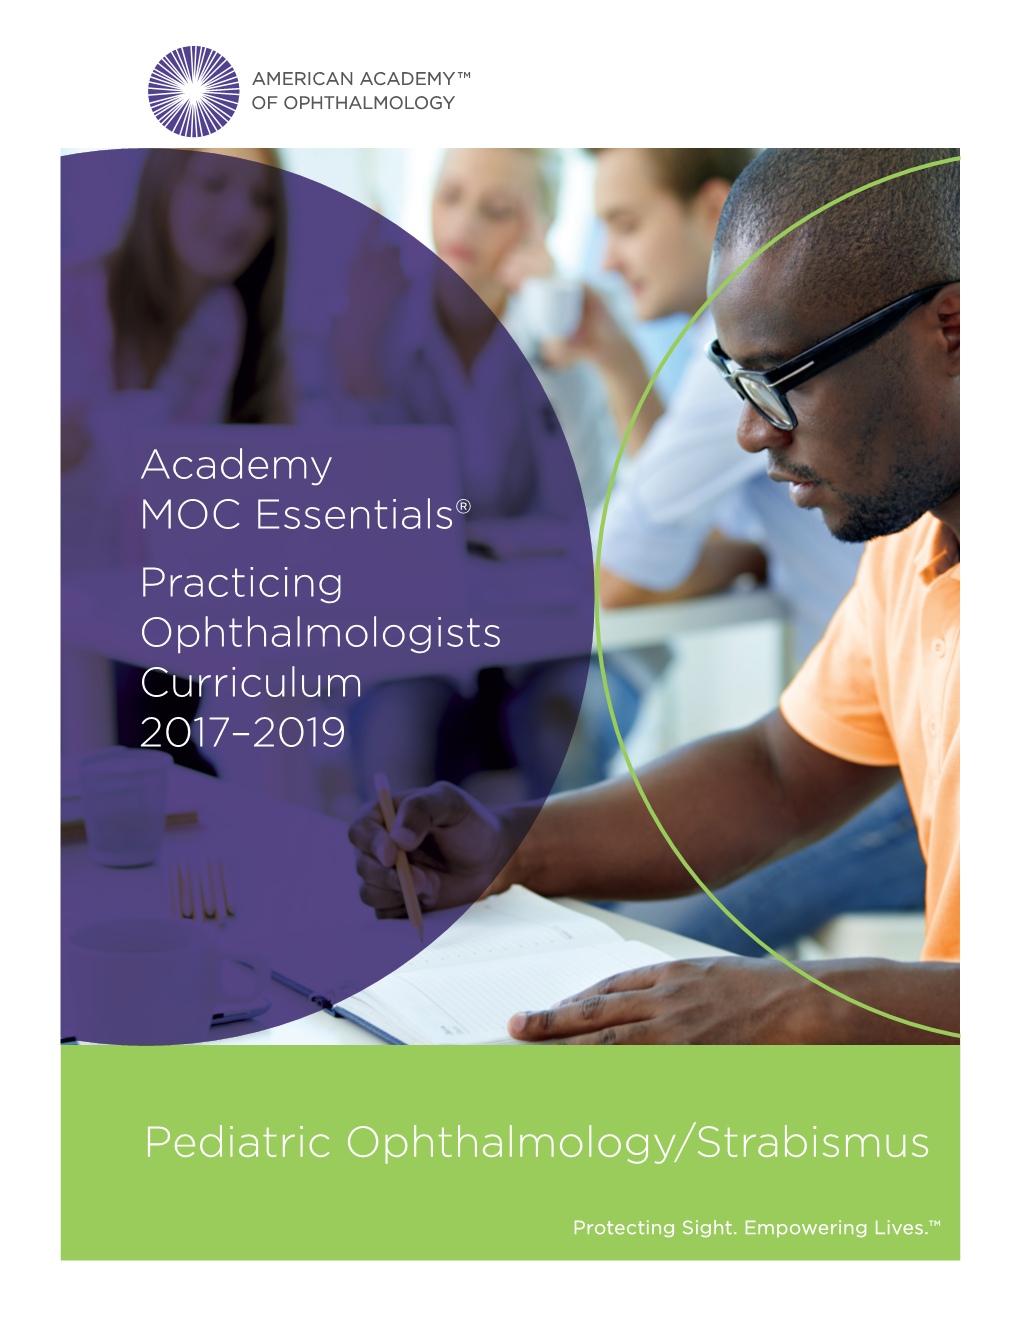 Pediatric Ophthalmology/Strabismus 2017-2019